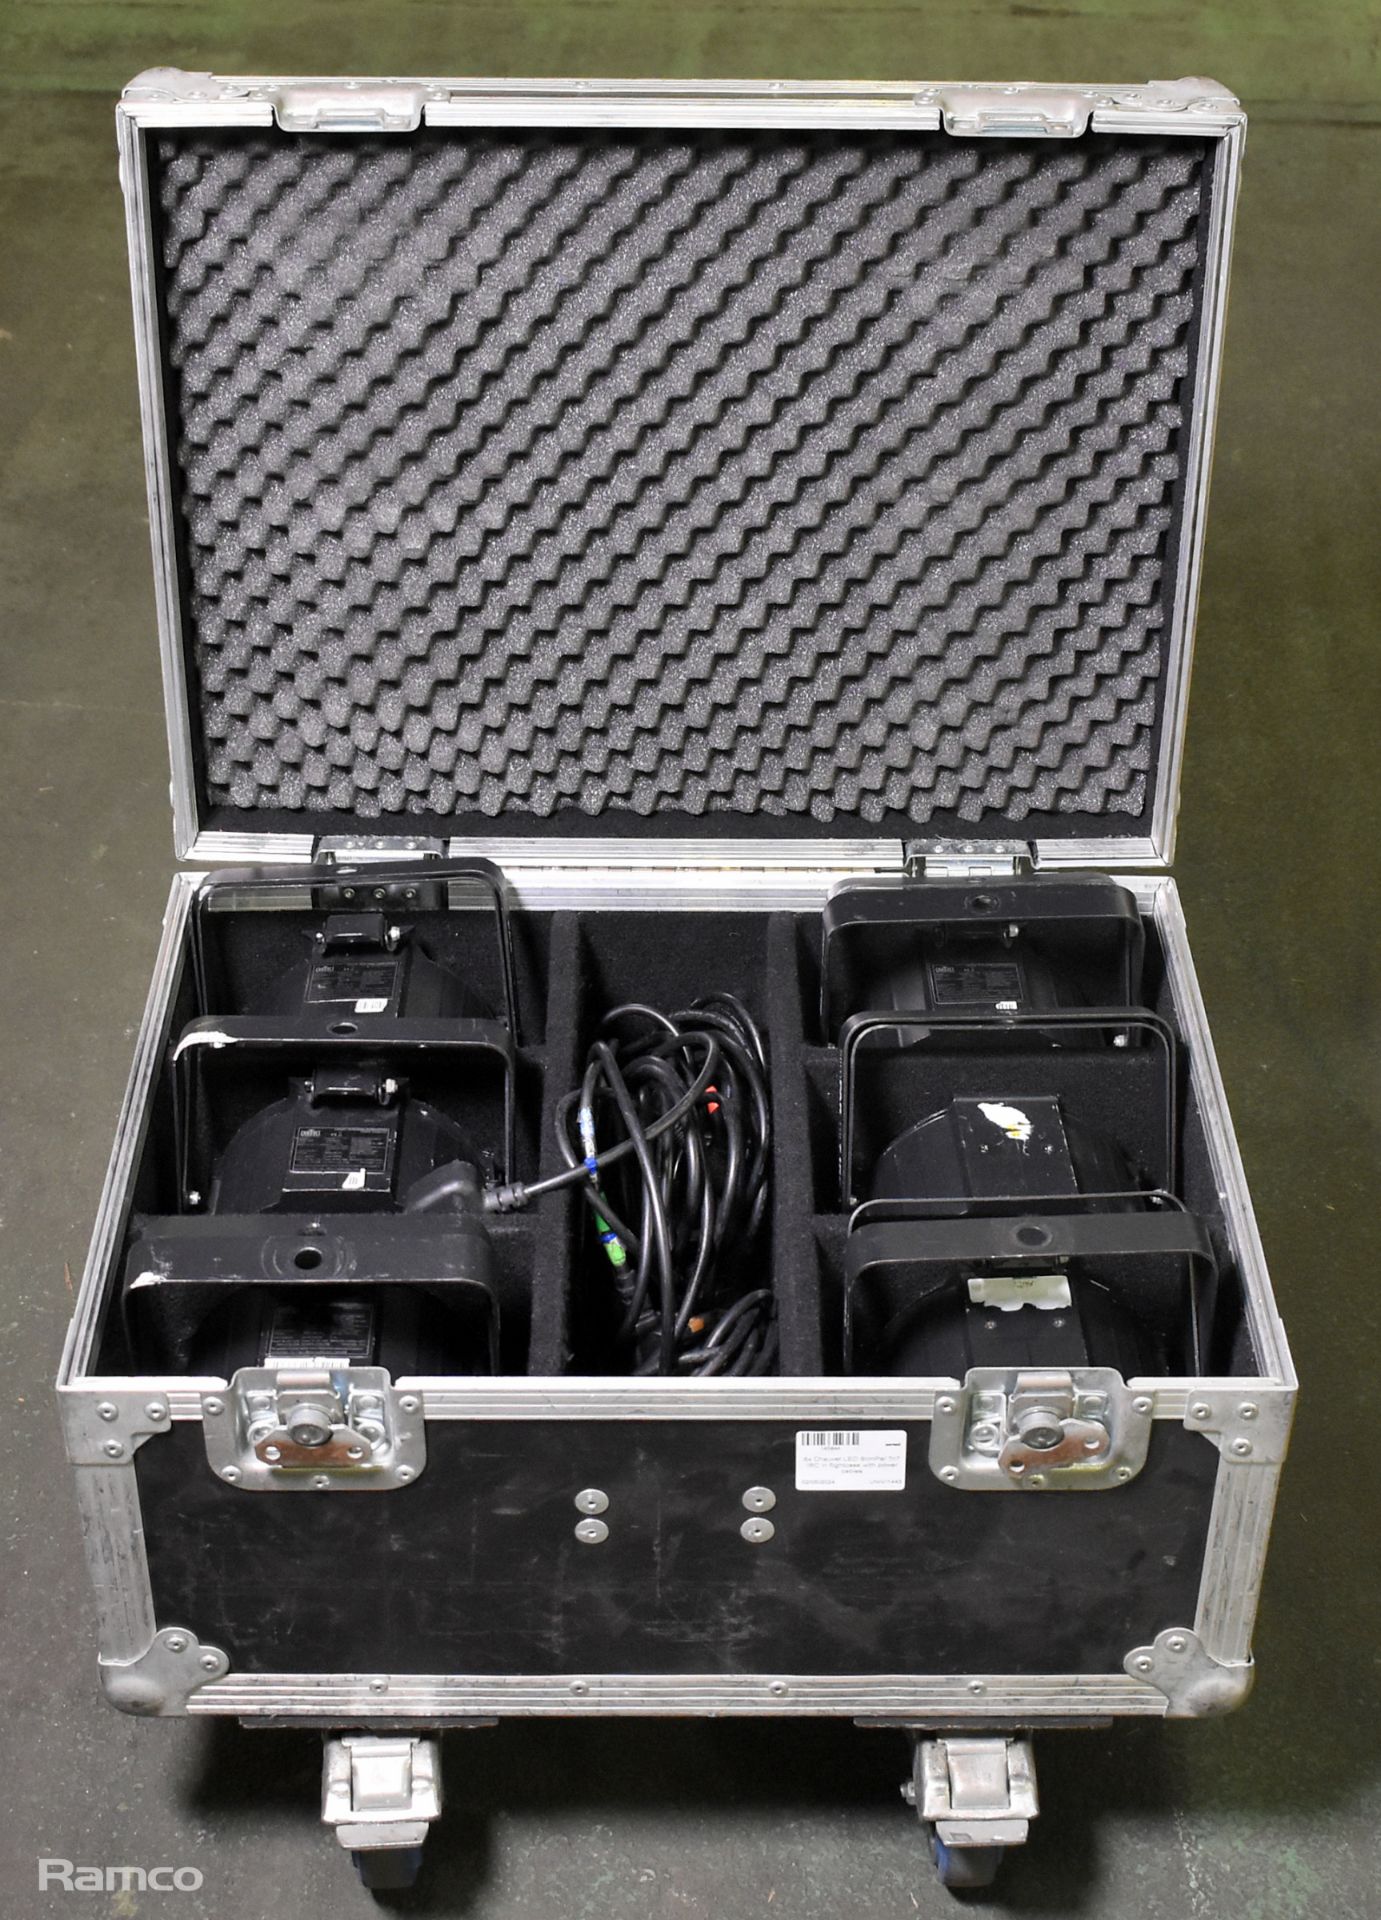 6x Chauvet LED SlimPar Tri7 IRC in flight case with power cables